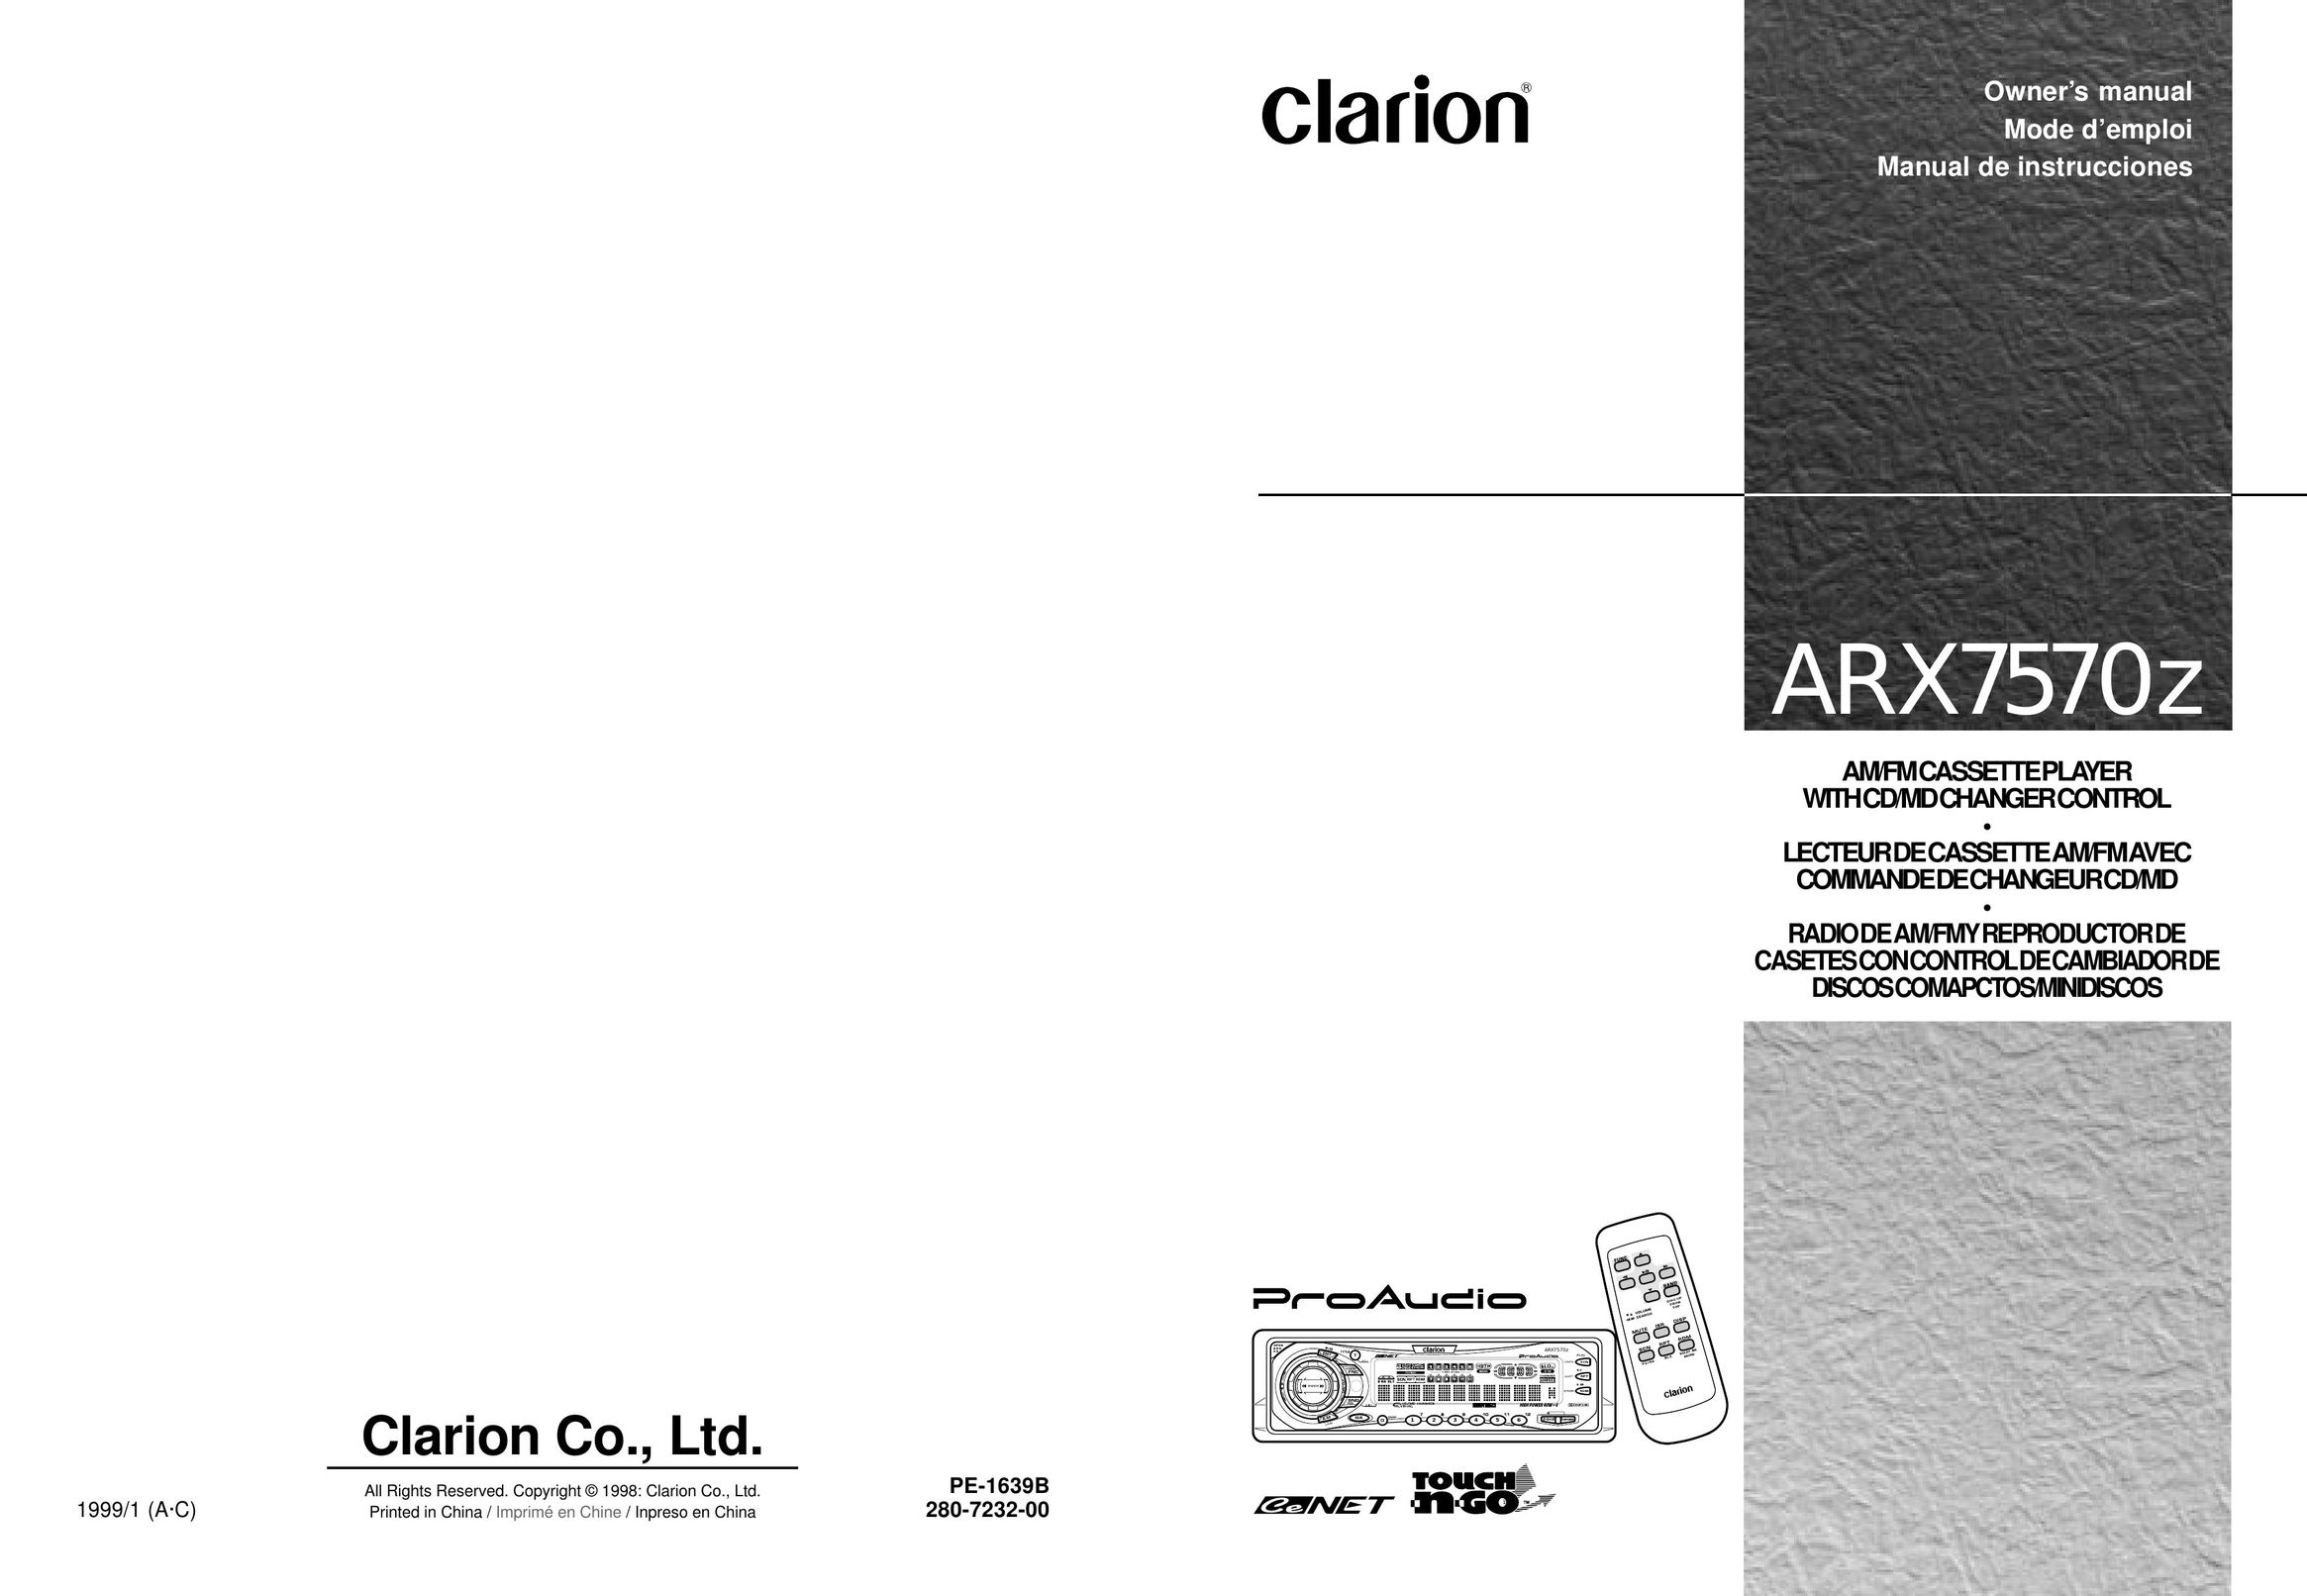 Clarion ARX7570Z Cassette Player User Manual